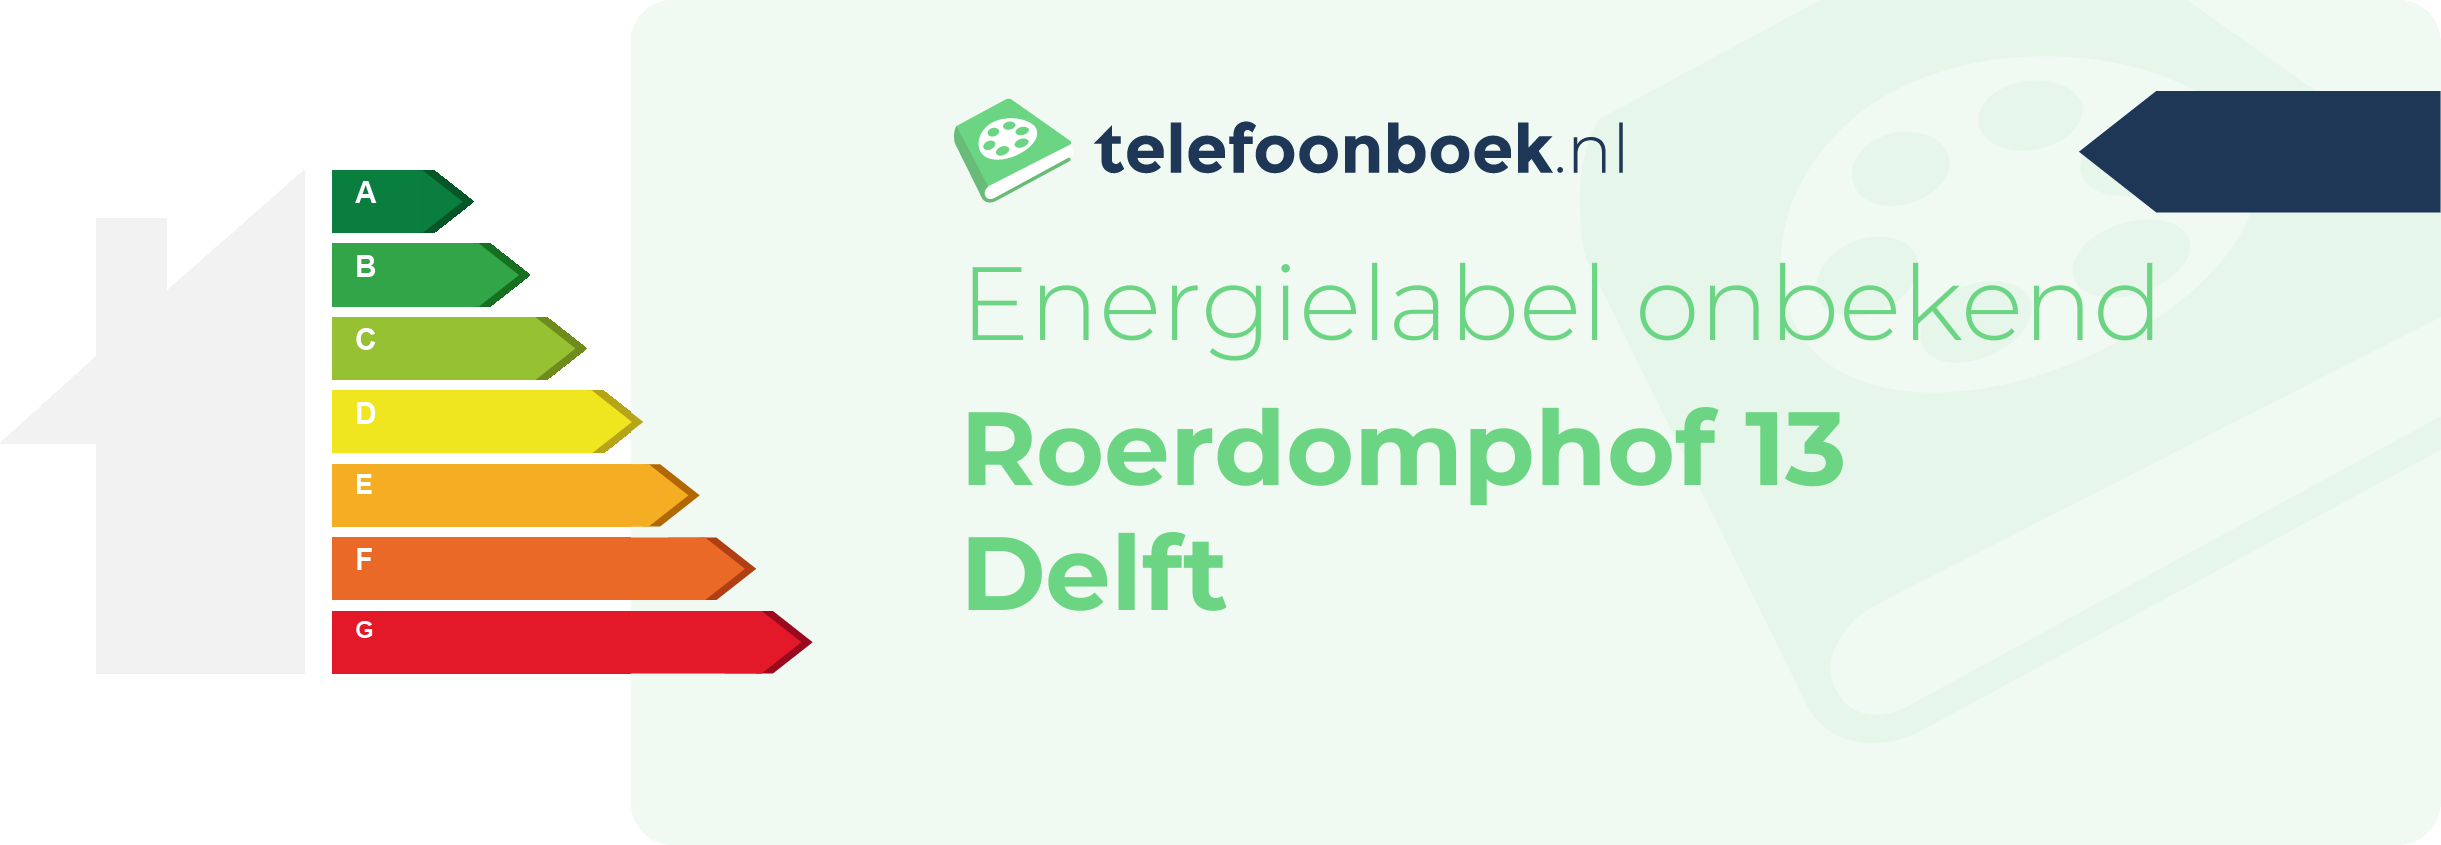 Energielabel Roerdomphof 13 Delft